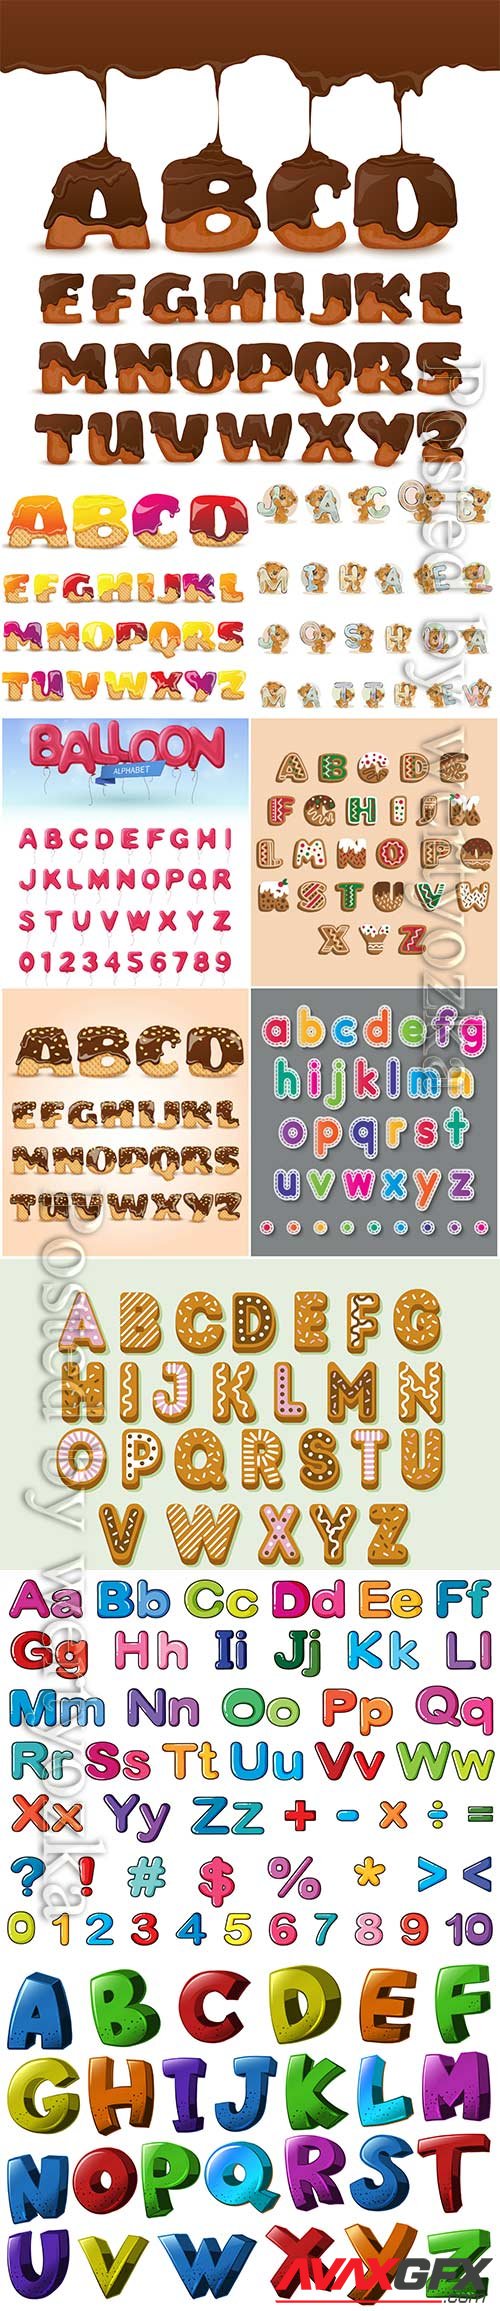 English alphabet fonts vector illustration